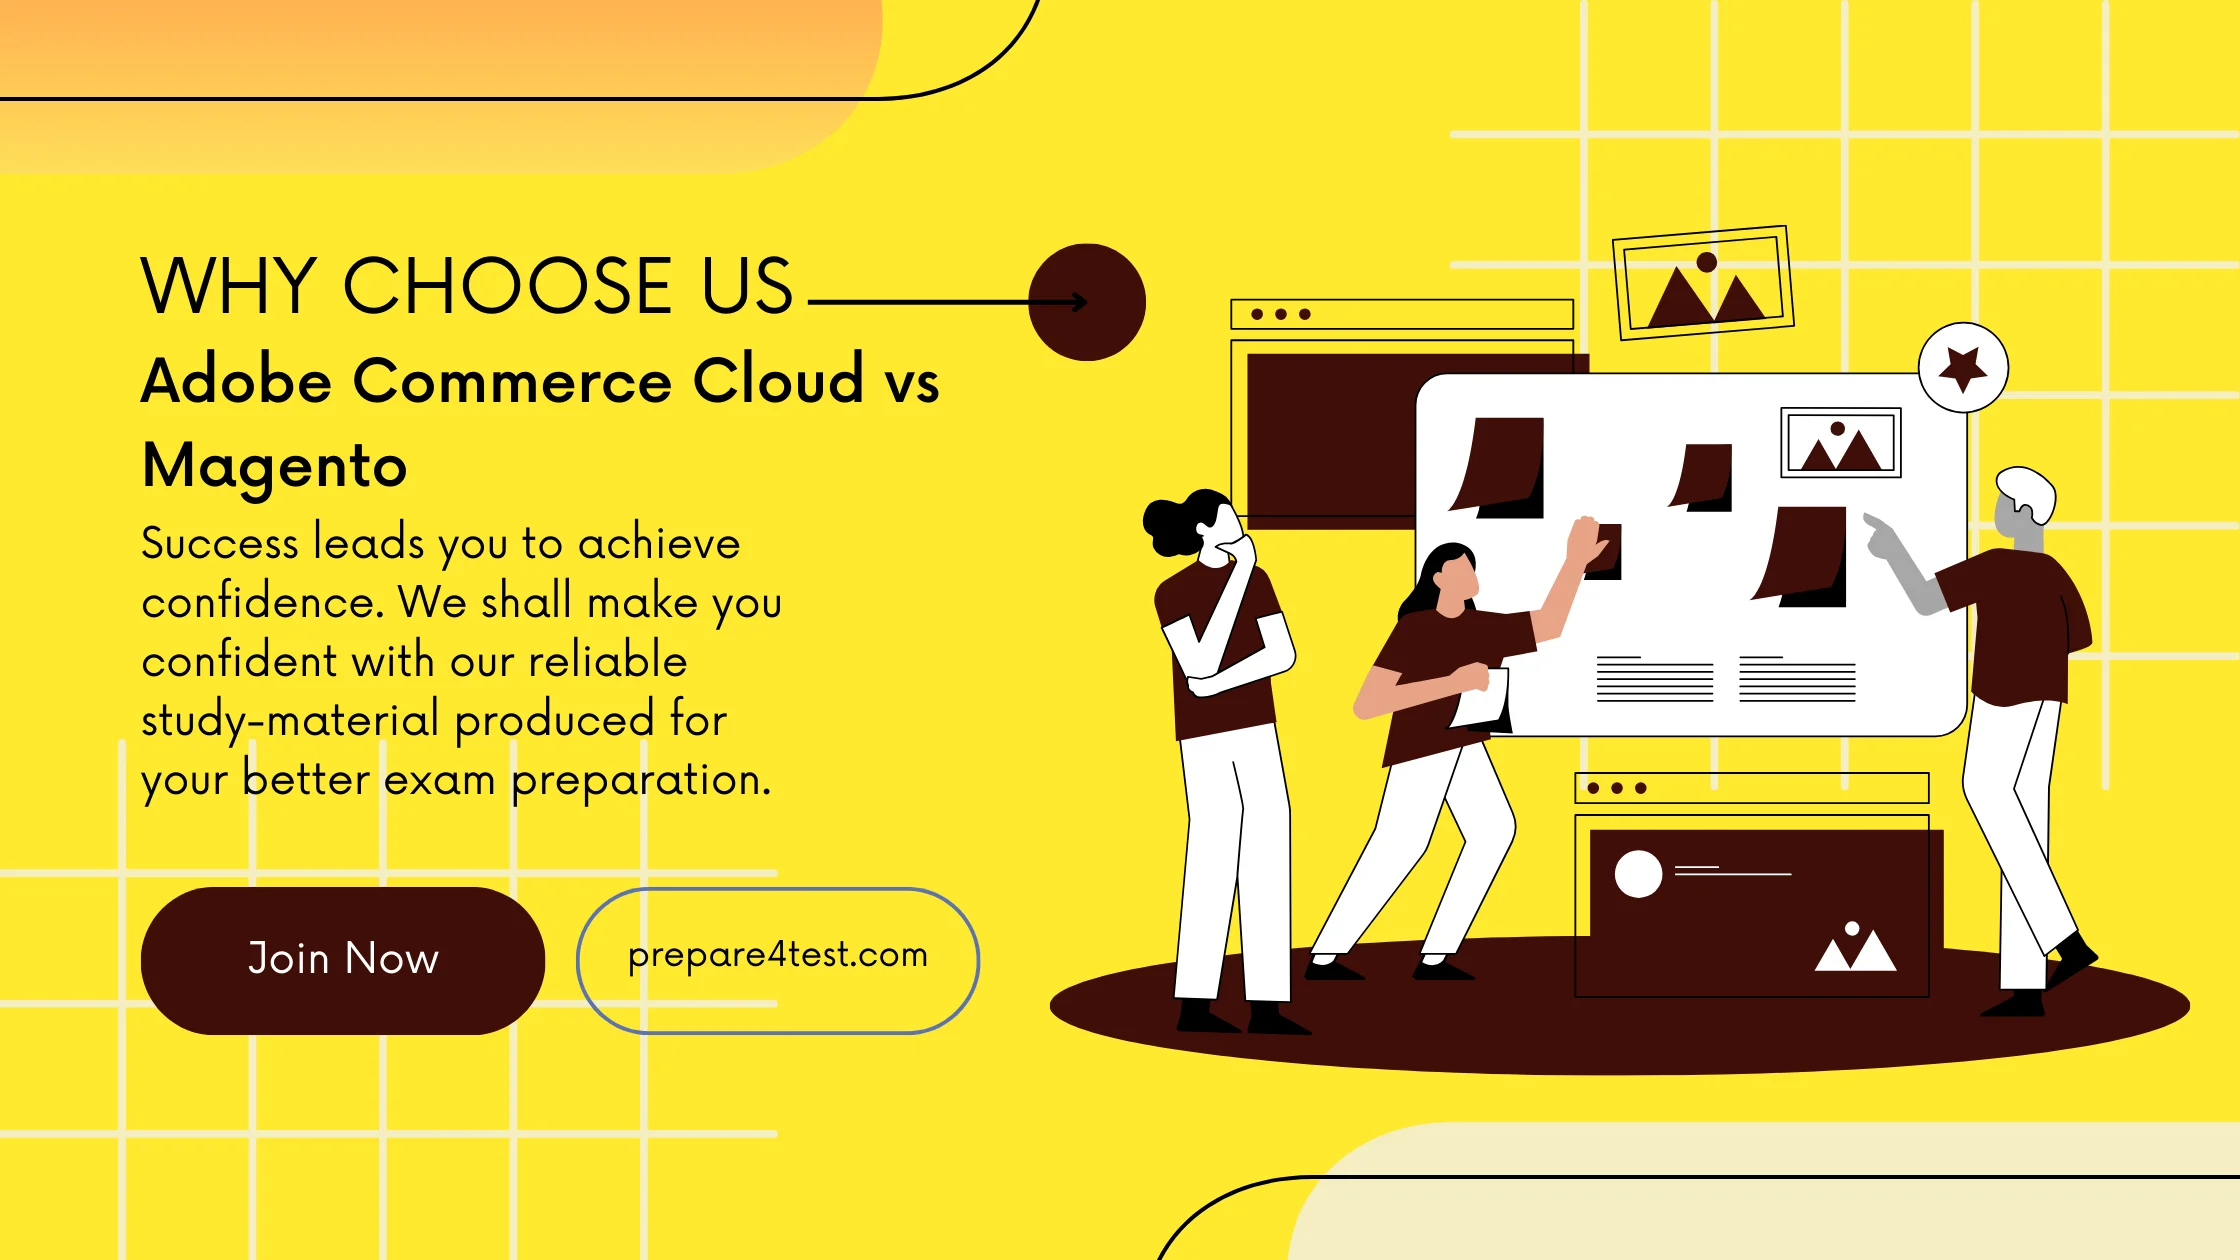 Adobe Commerce Cloud vs Magento